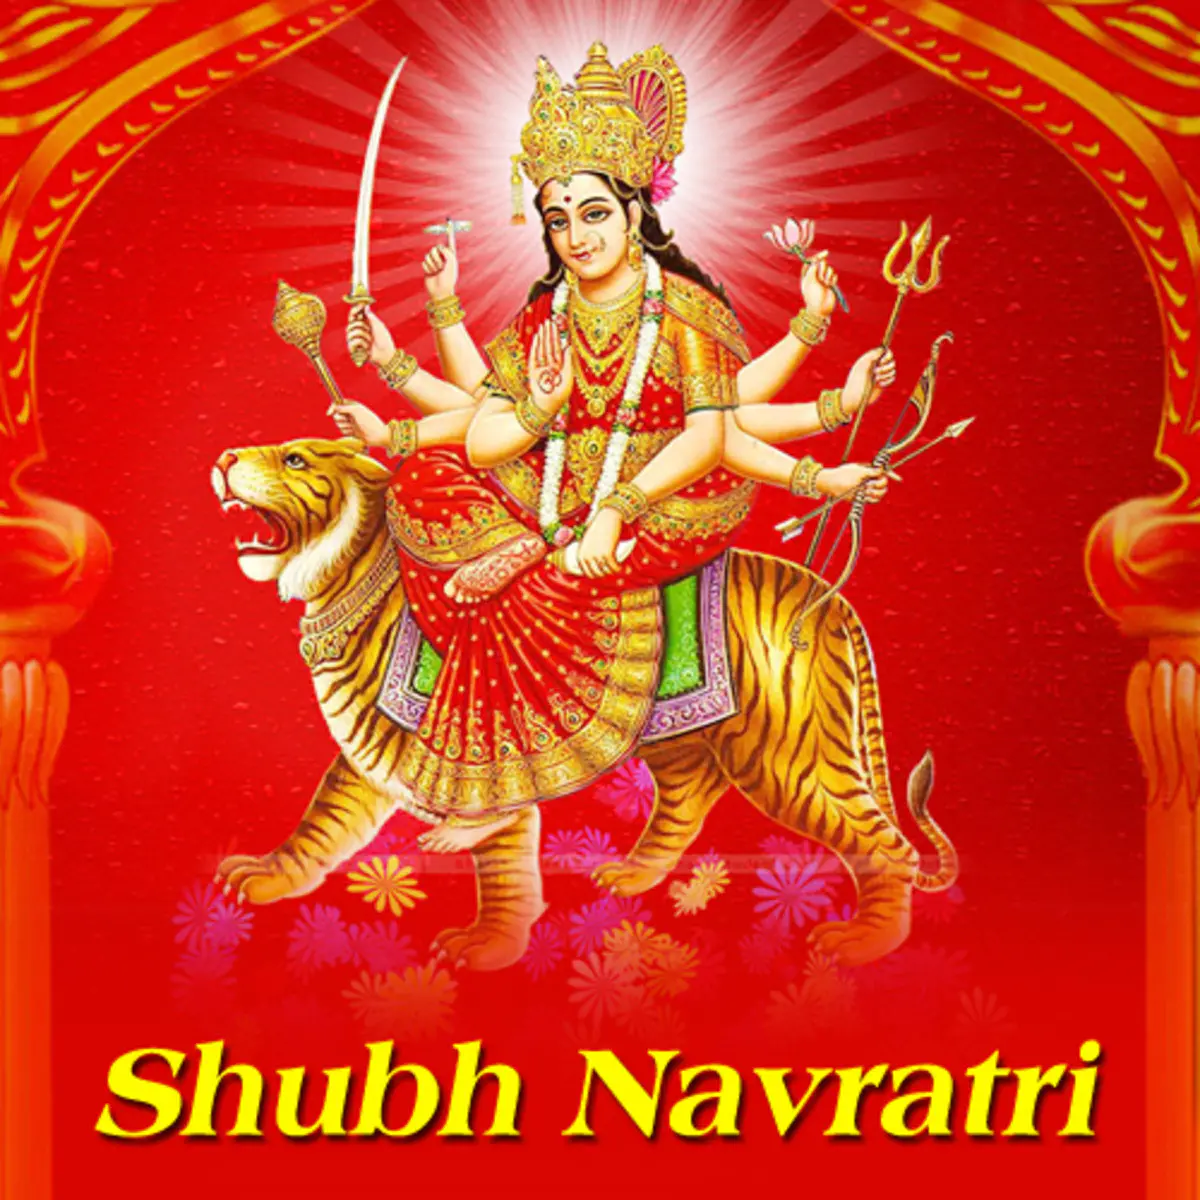 Shubh Navratri Songs Download Navratri Mp3 Songs Hindi Online Free On Gaana Com Sonu nigam, anuradha paudwal and others. shubh navratri songs download navratri